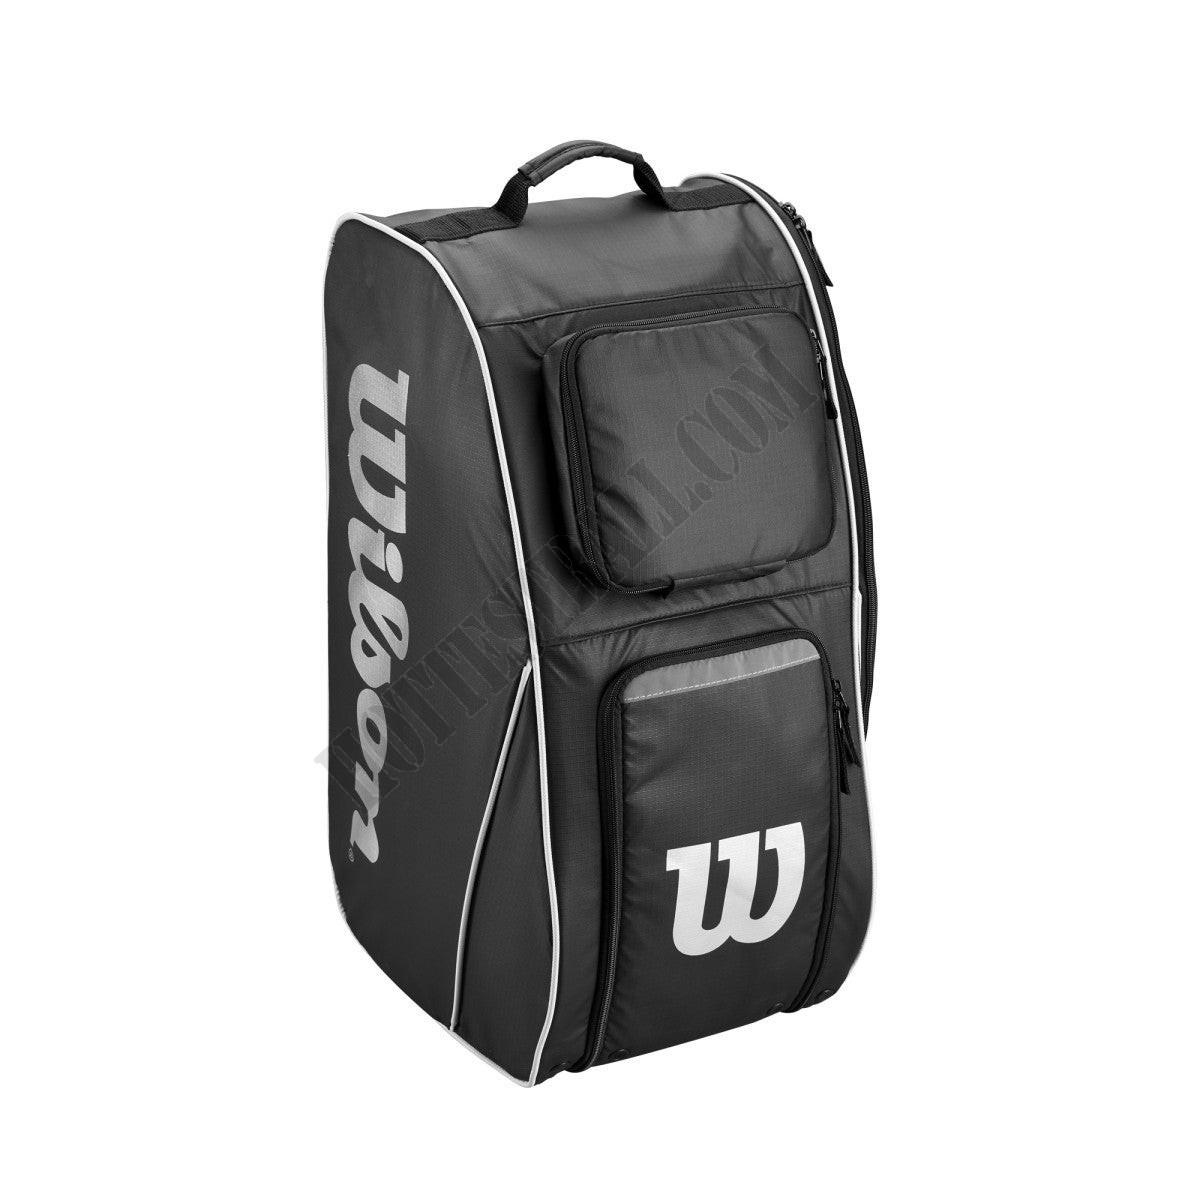 Tackle Football Player Equipment Bag - Wilson Discount Store - Tackle Football Player Equipment Bag - Wilson Discount Store